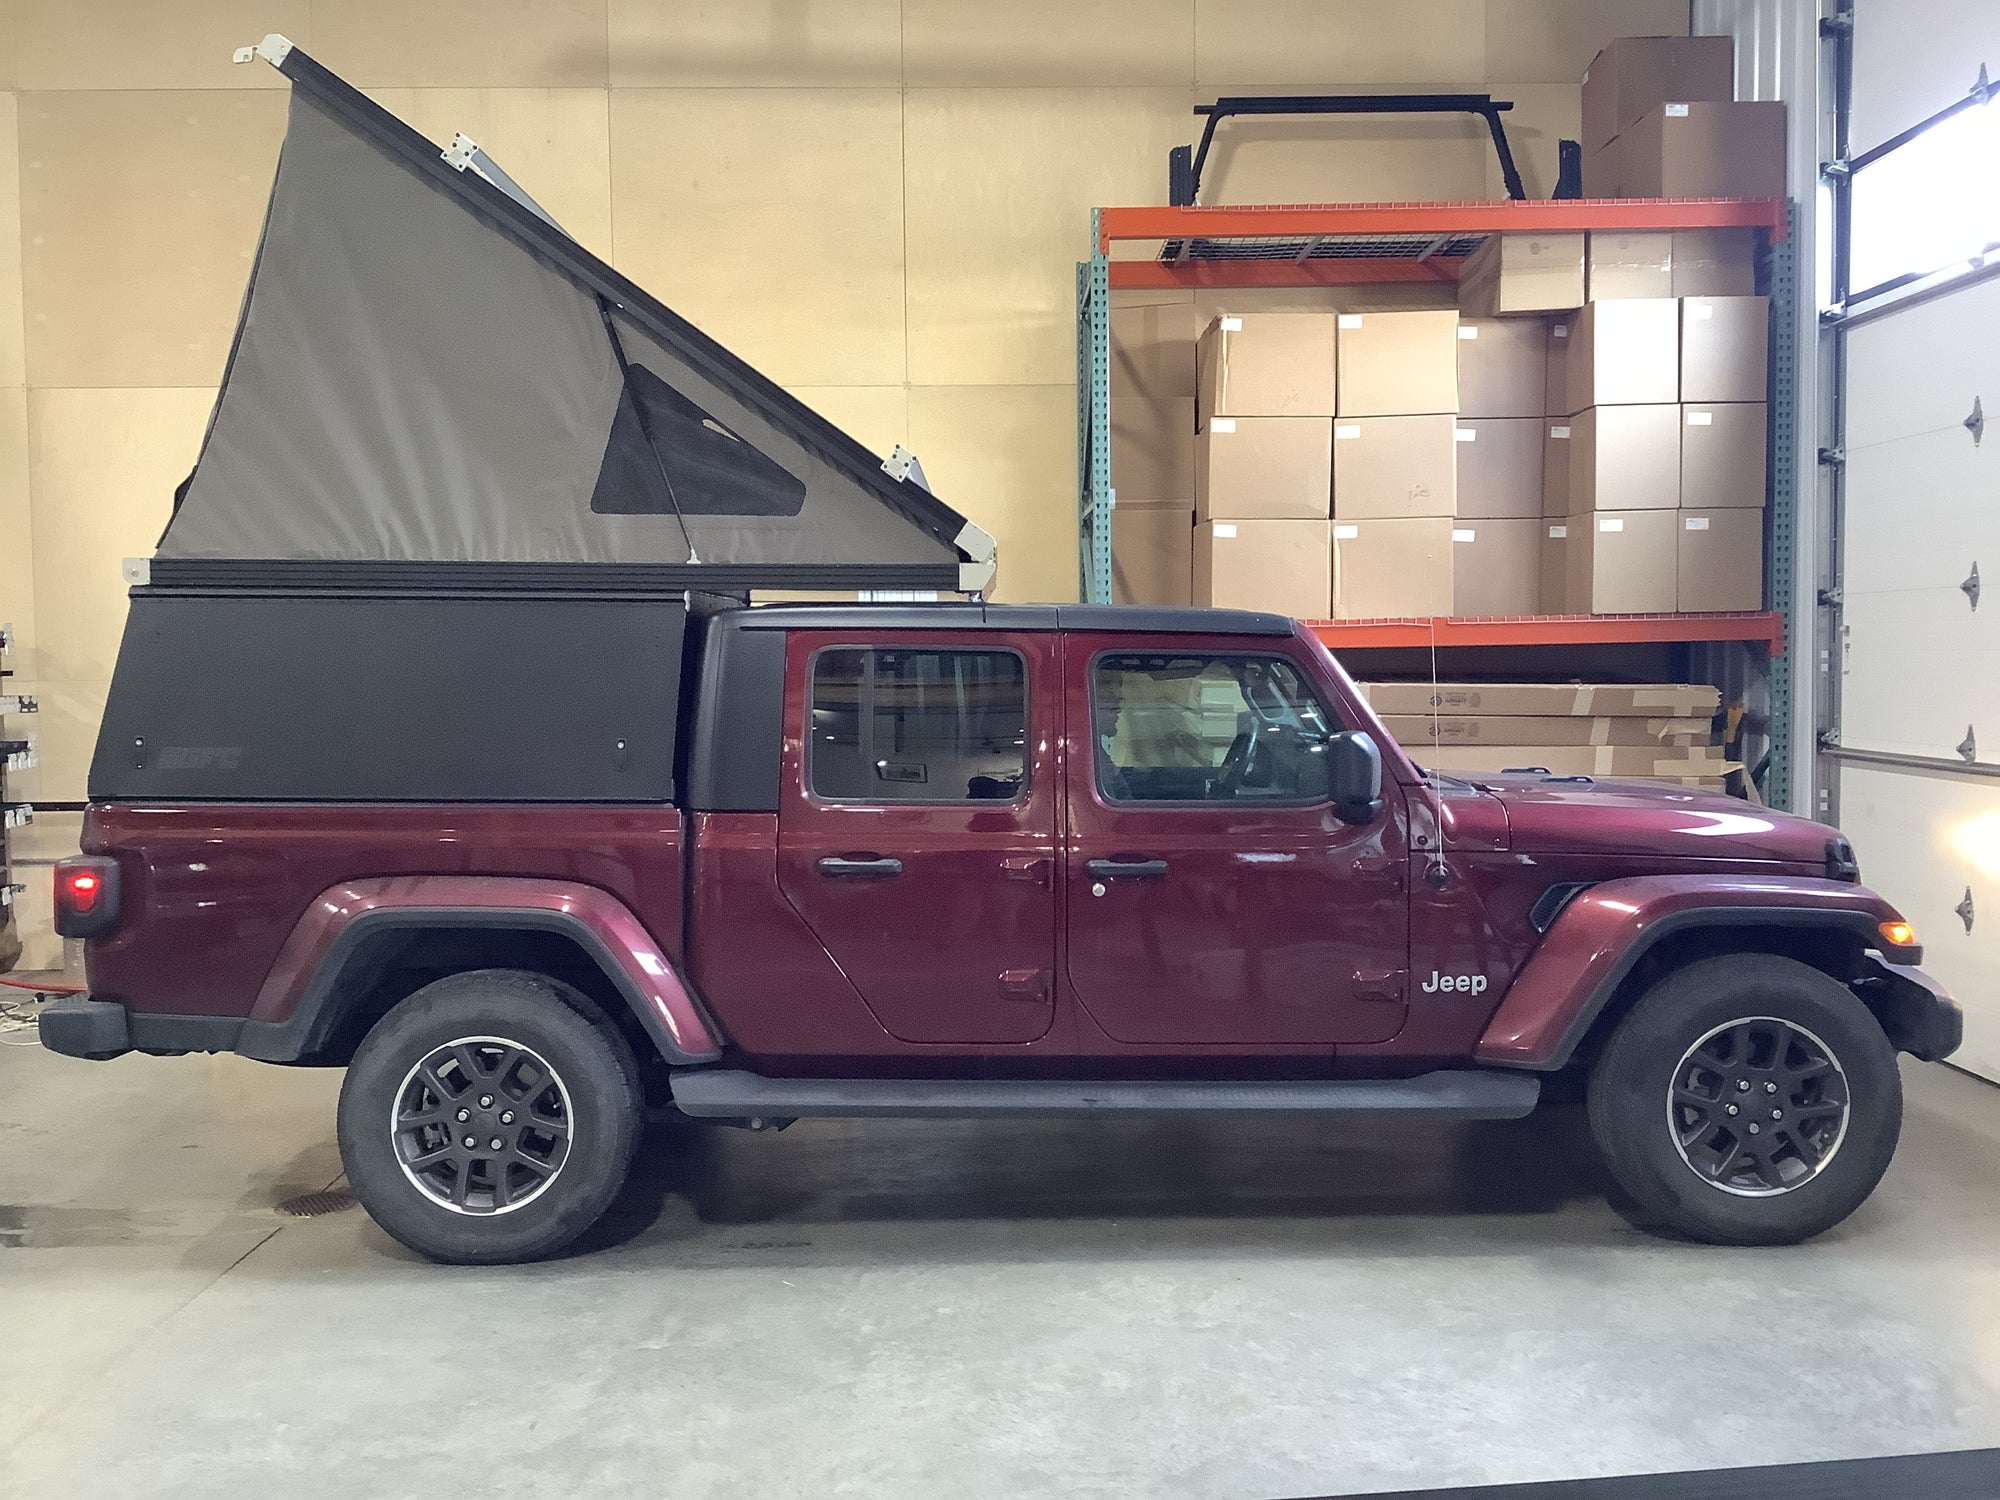 2021 Jeep Gladiator Camper - Build #3518